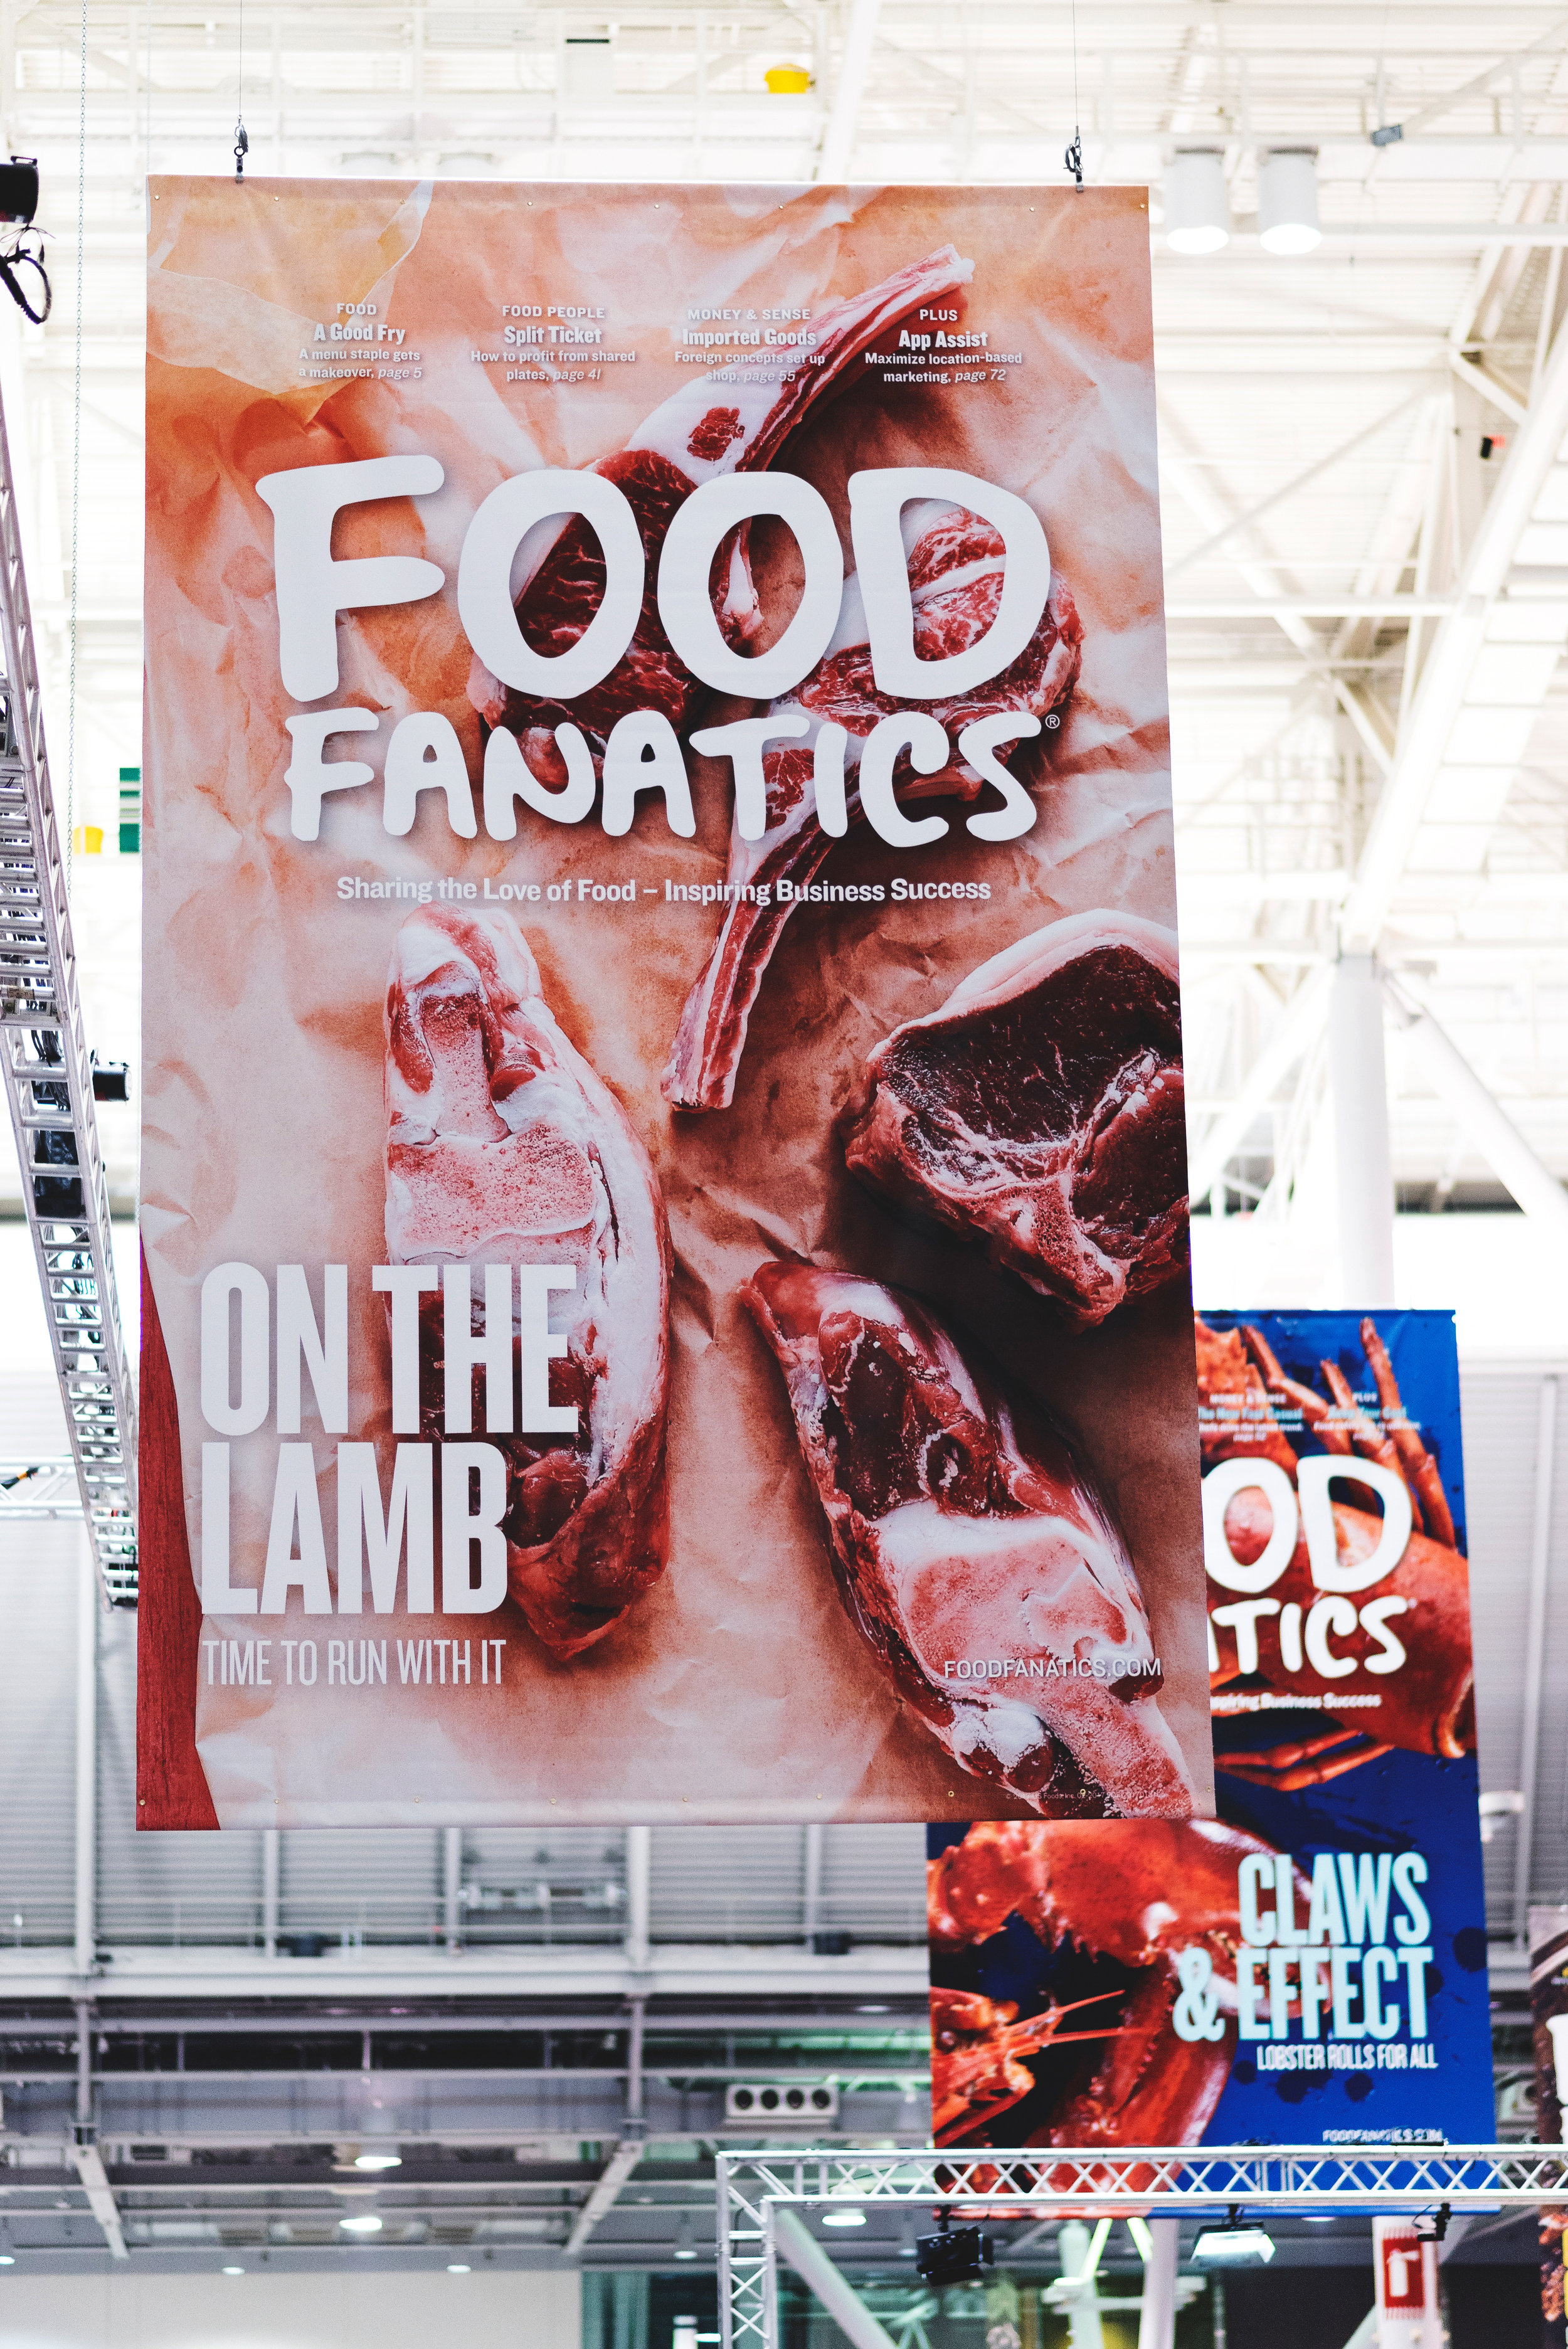 FoodFanaticsLive-Event-Food-Photography128.jpg